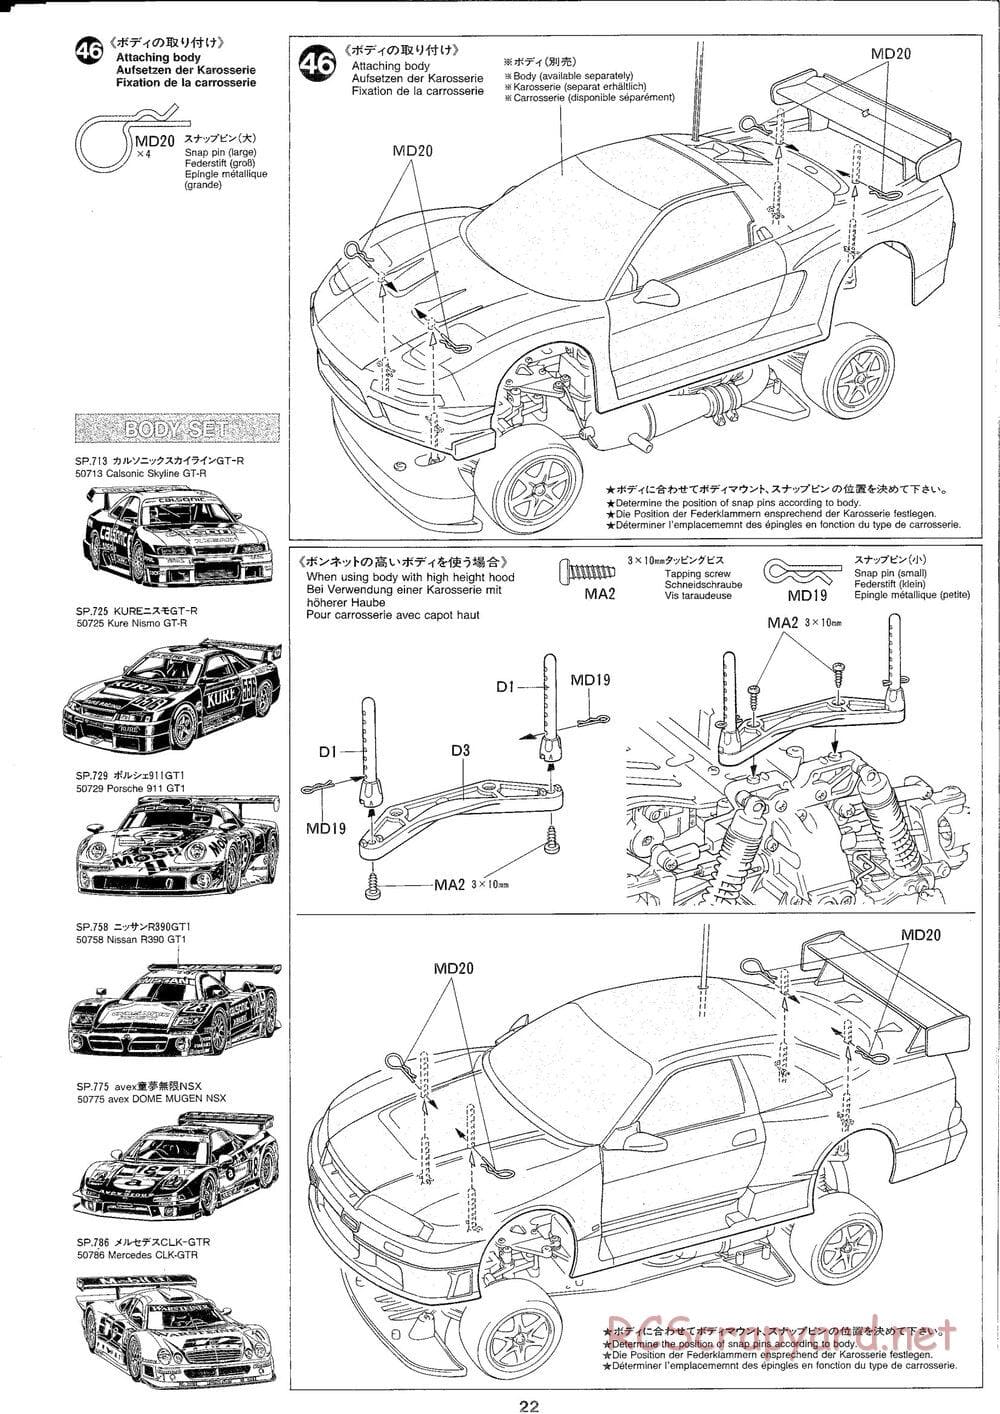 Tamiya - TGX Mk.1 TRF Special Chassis - Manual - Page 22